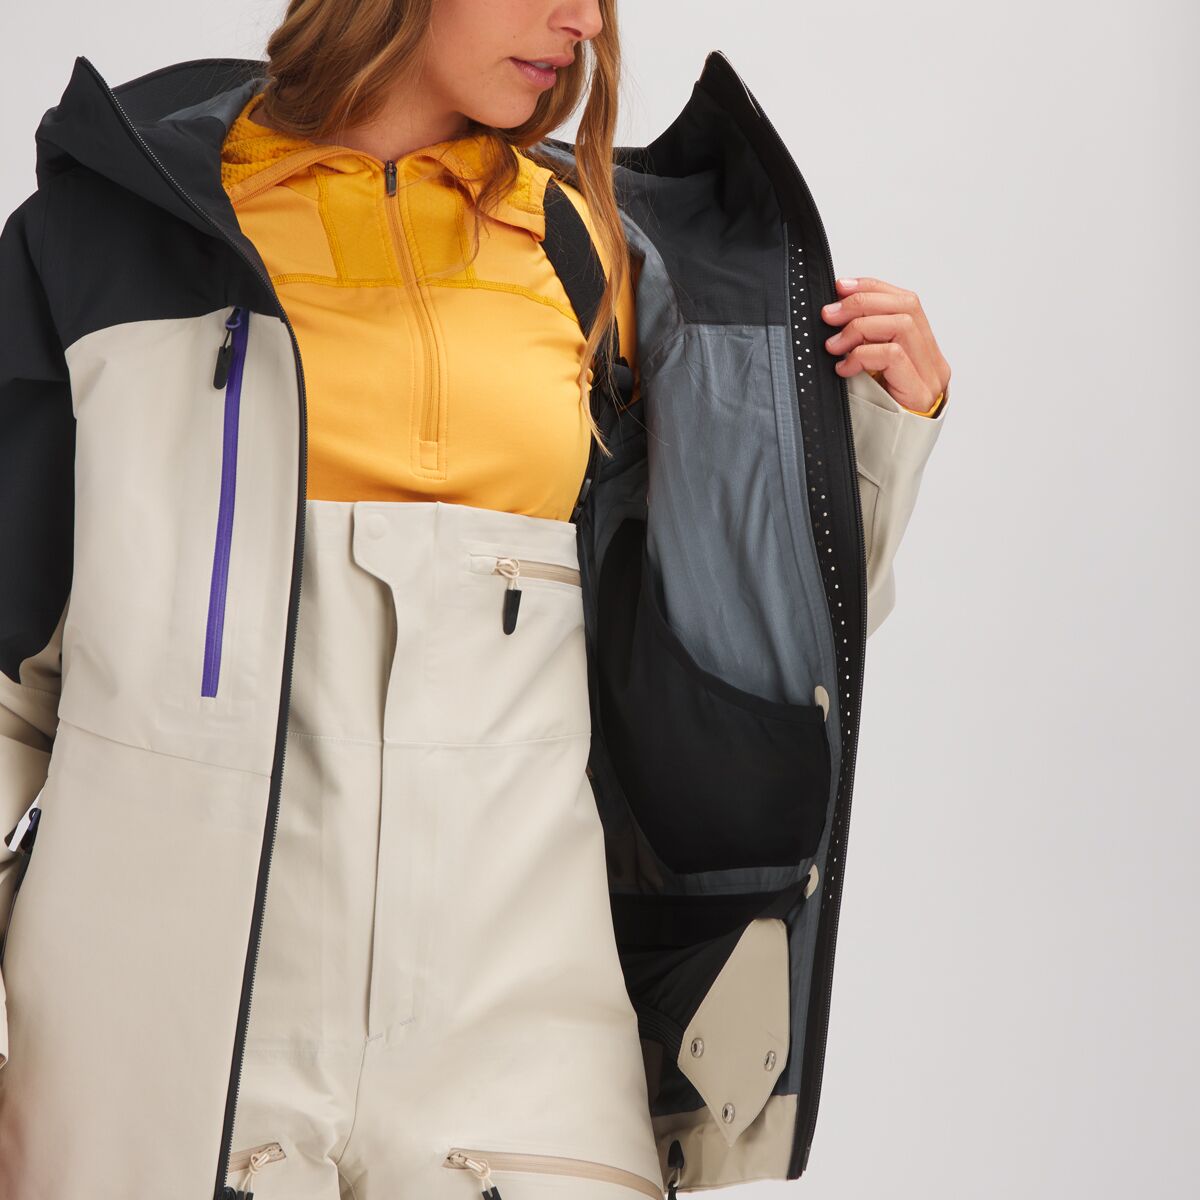 Backcountry Cardiac GORE-TEX PRO Jacket - Women's - Clothing